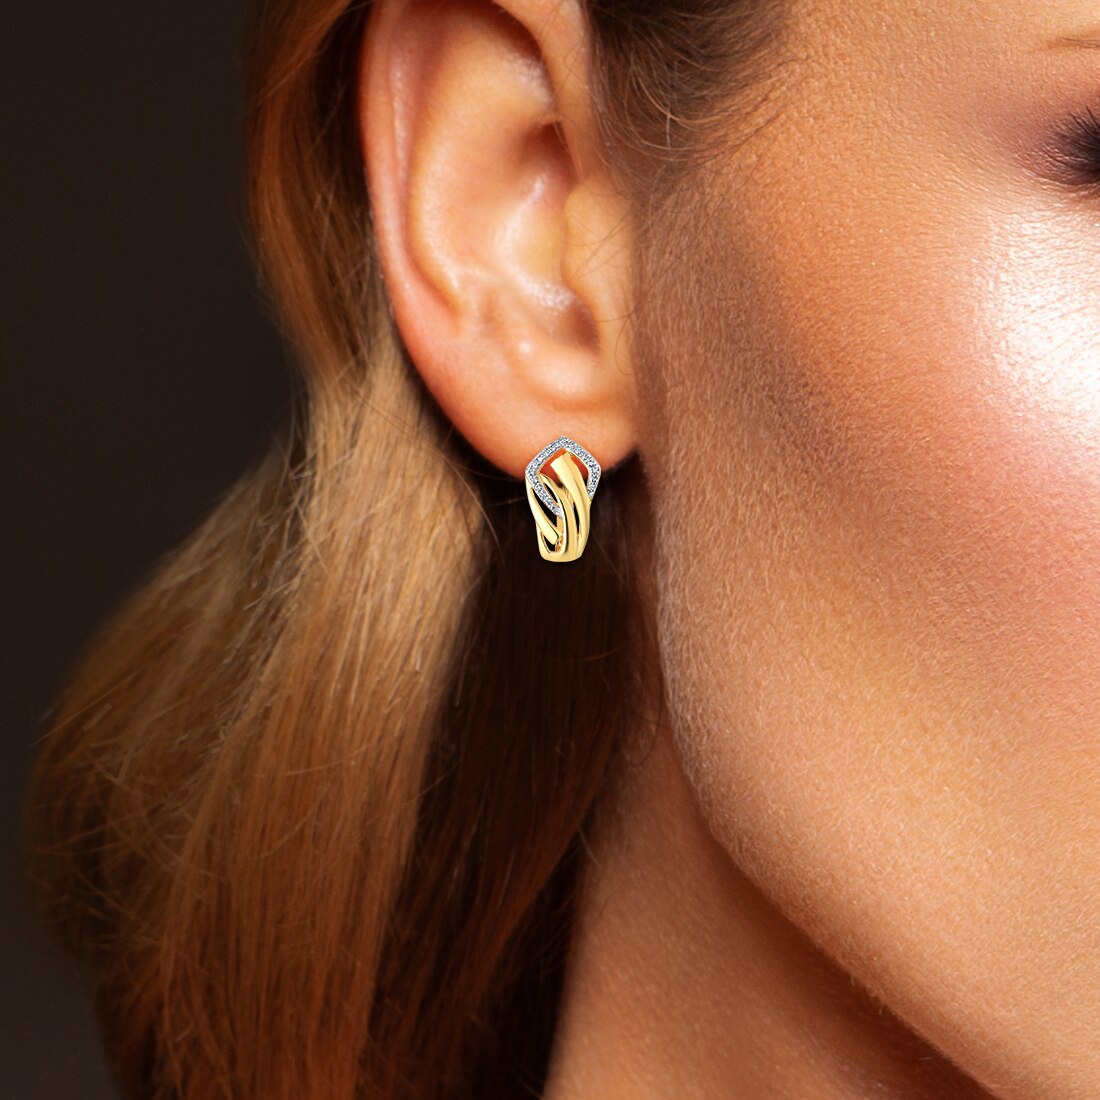 Natural Diamond Earrings. 14K Yellow Gold.